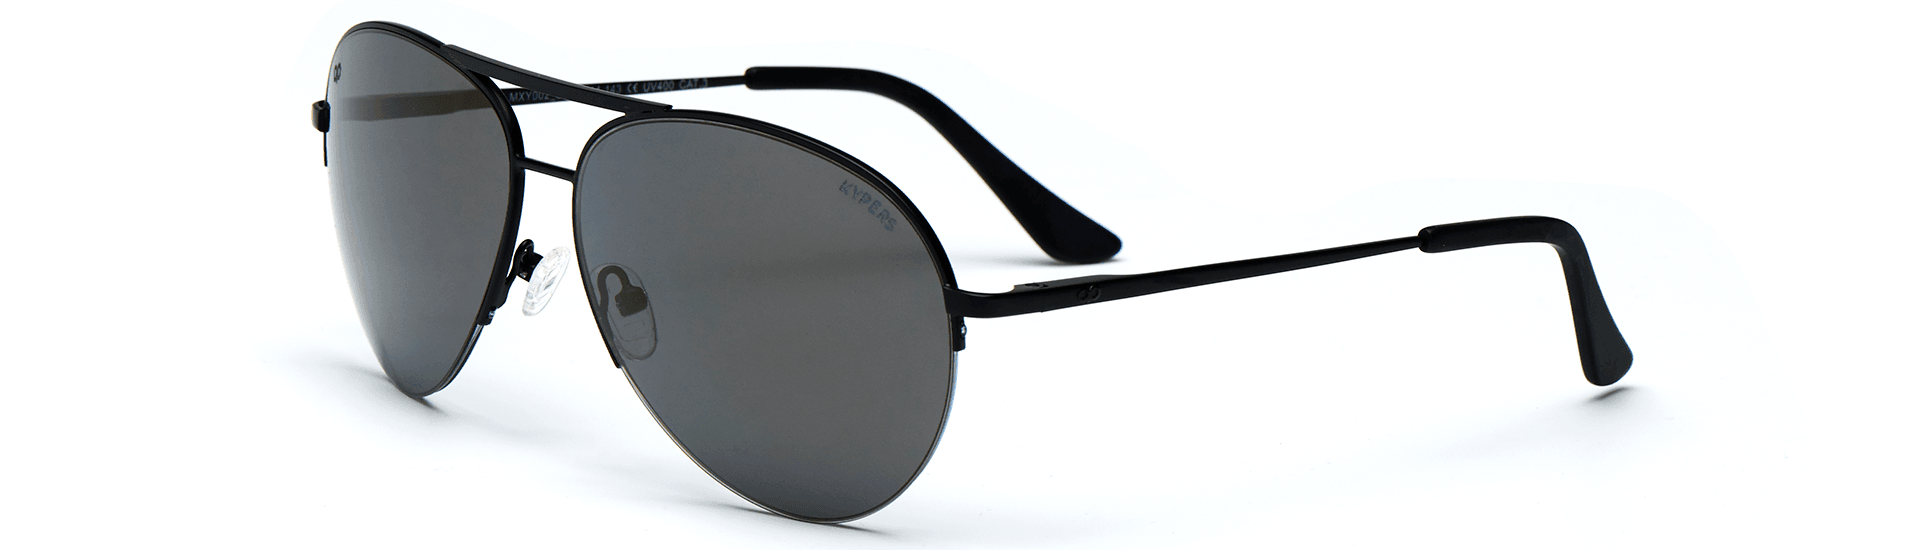 ocean sunglasses KRNglasses model MAXY SKU MXY003.S with black frame and orange mirror lens